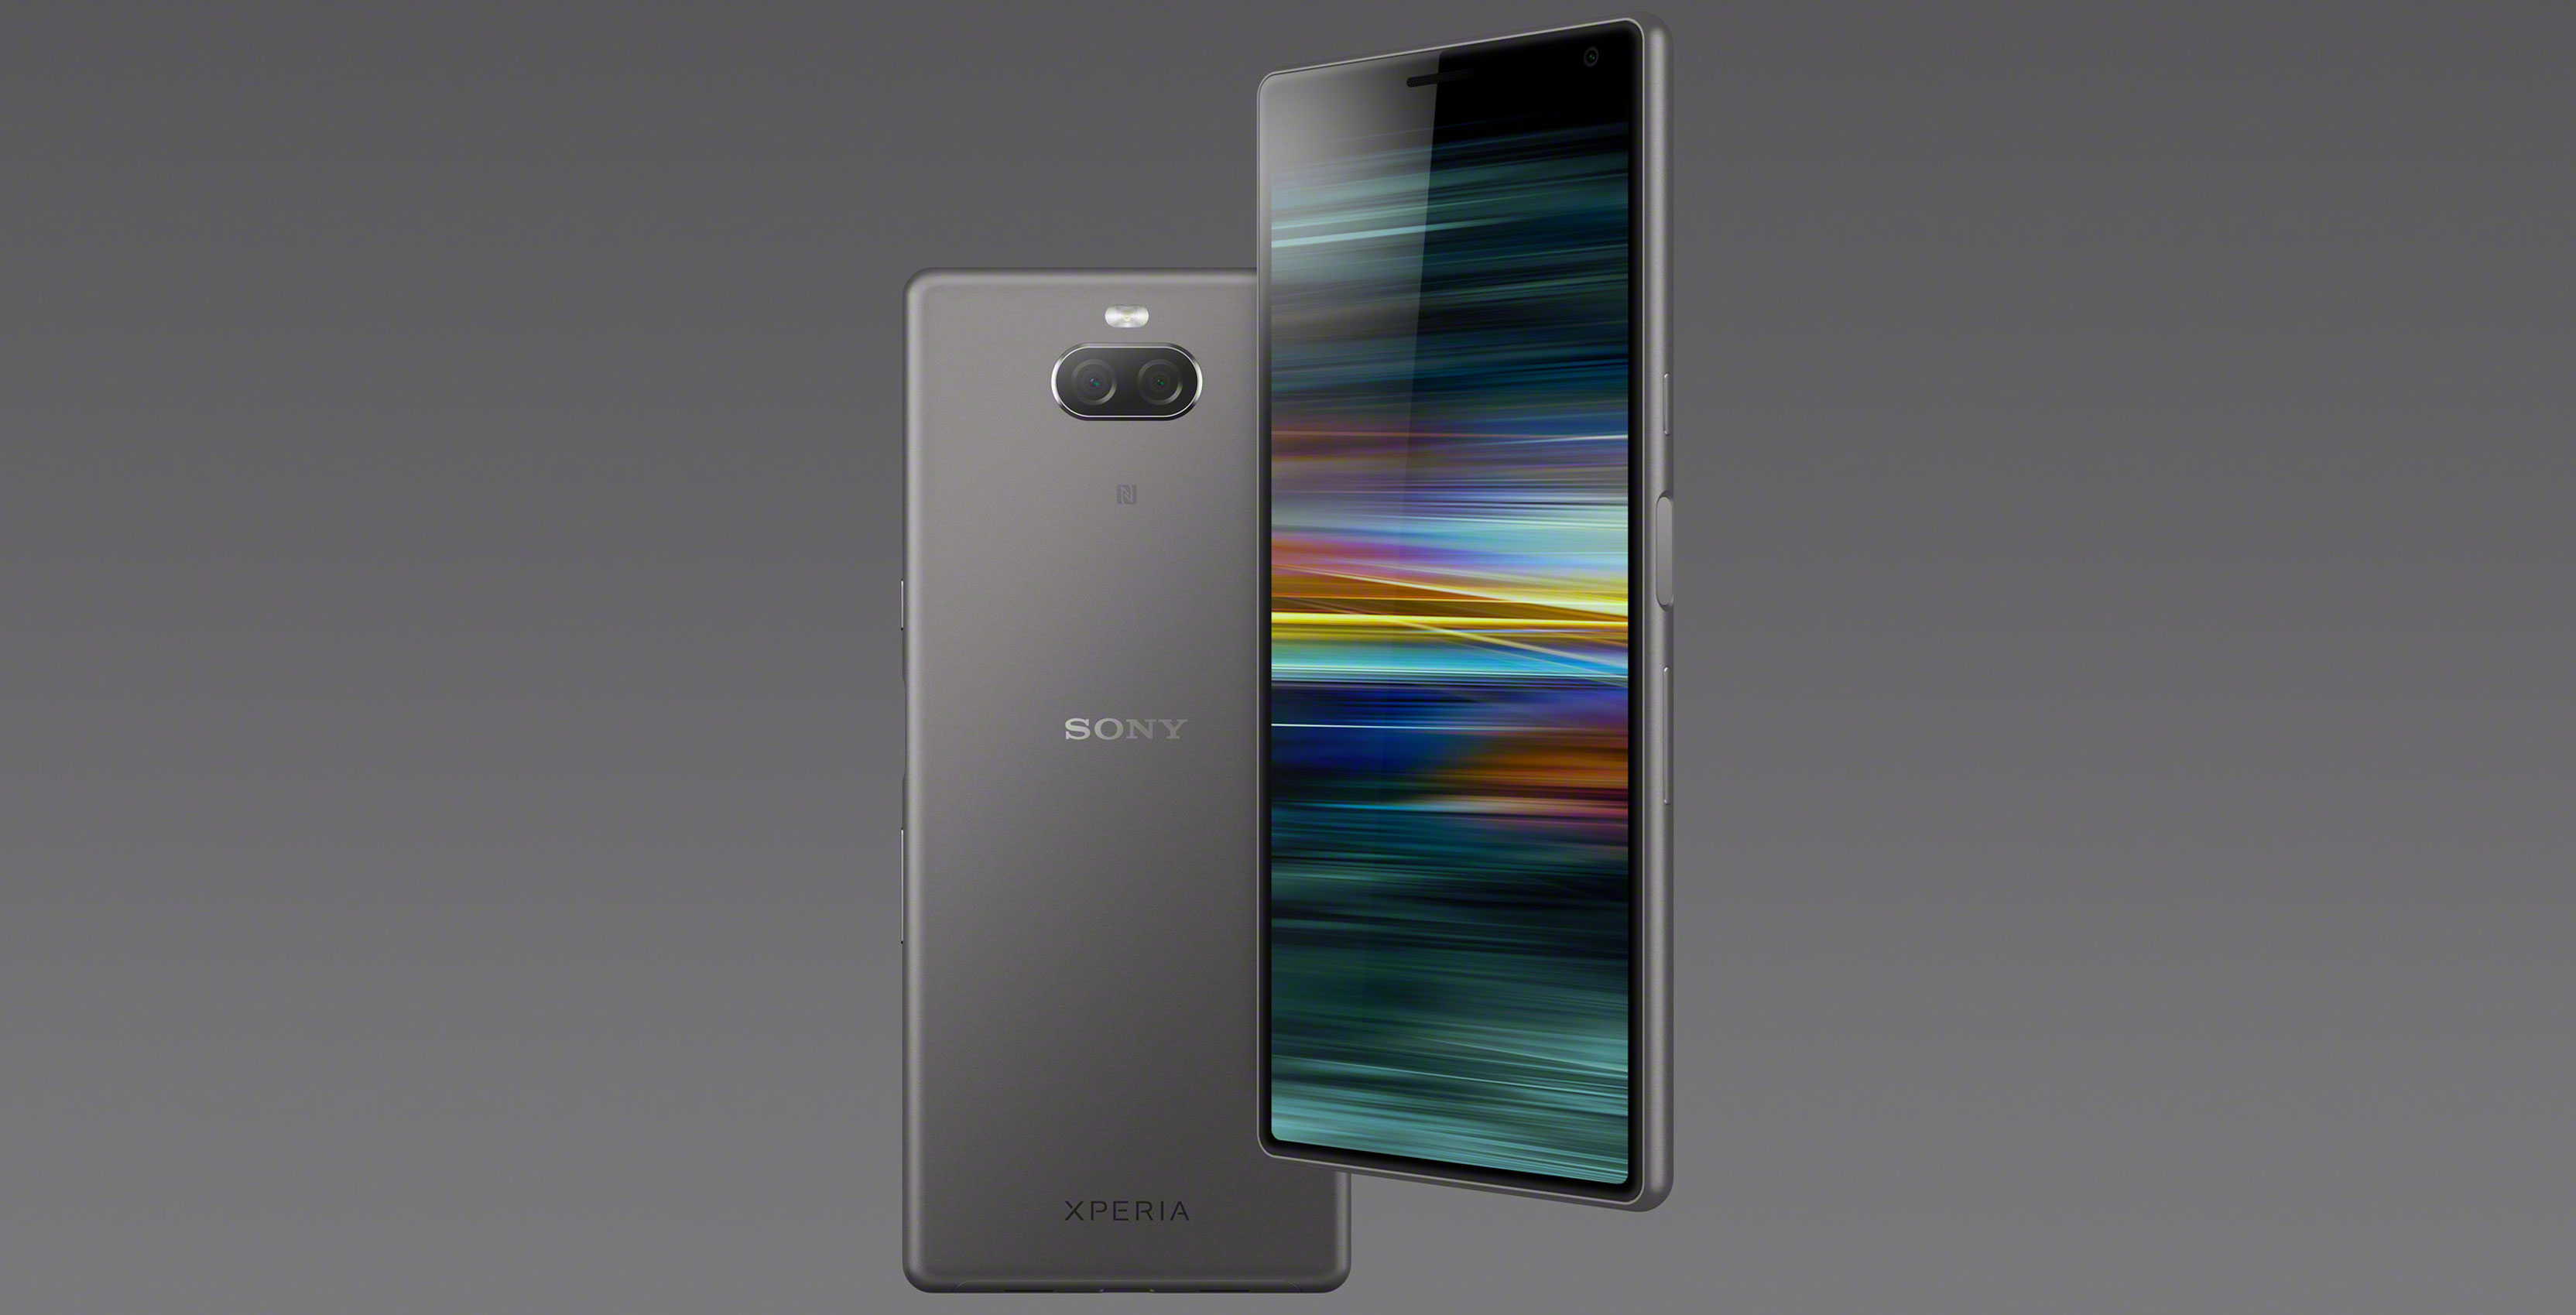 Sony's new Xperia 10 smartphone